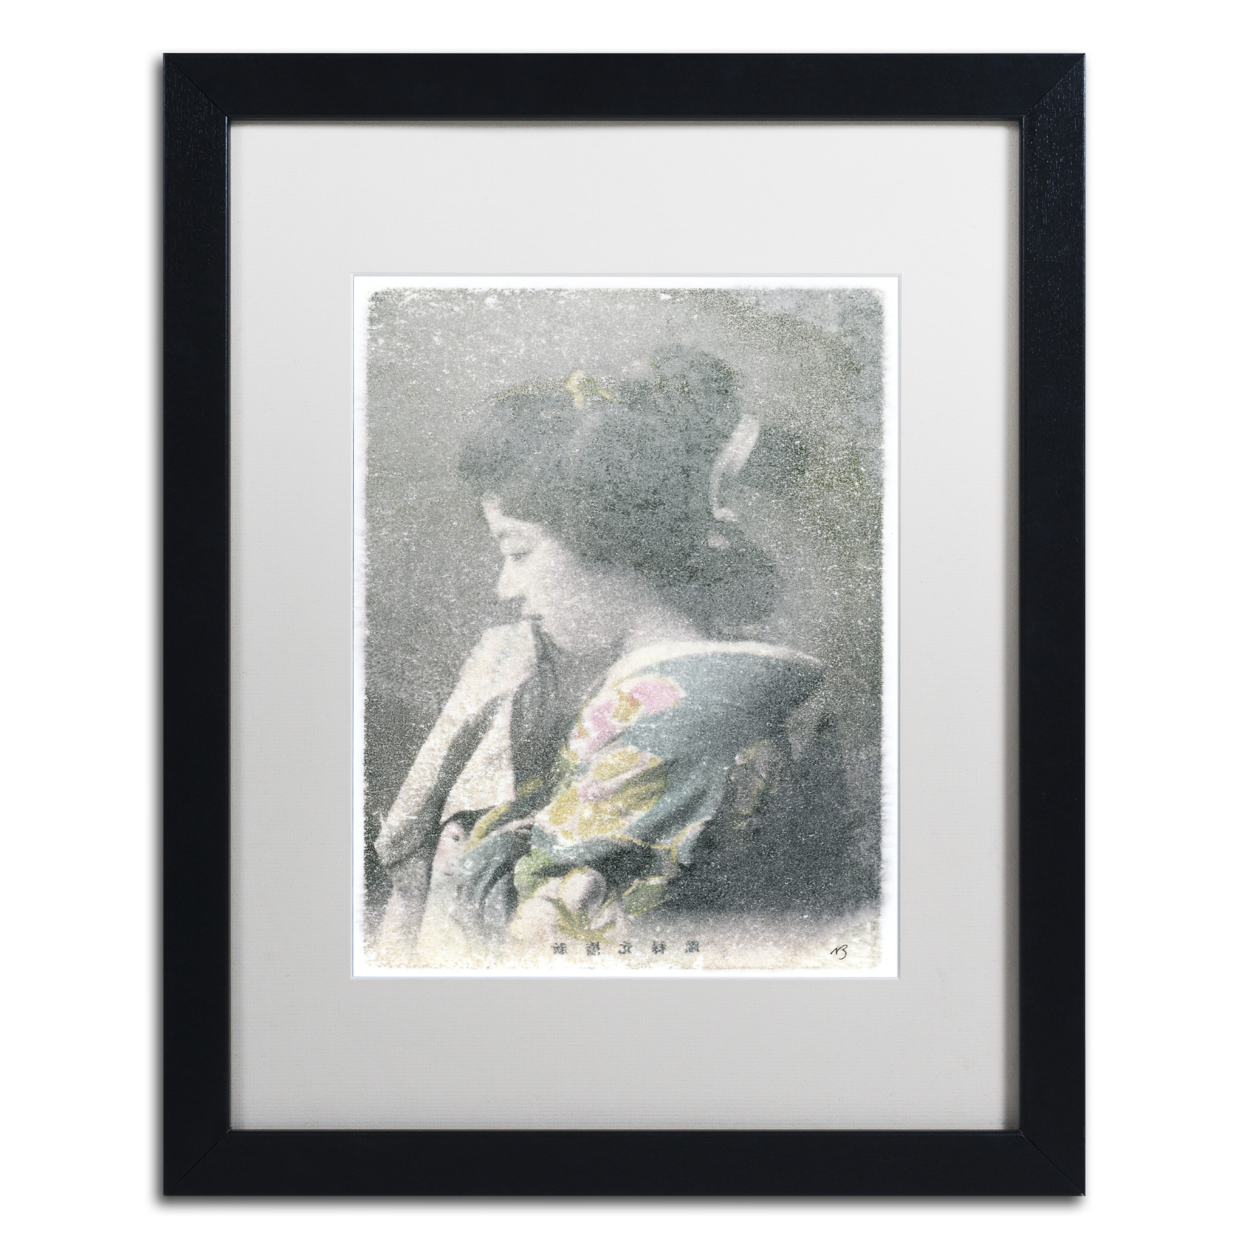 Nick Bantock 'Handmaid' Black Wooden Framed Art 18 X 22 Inches